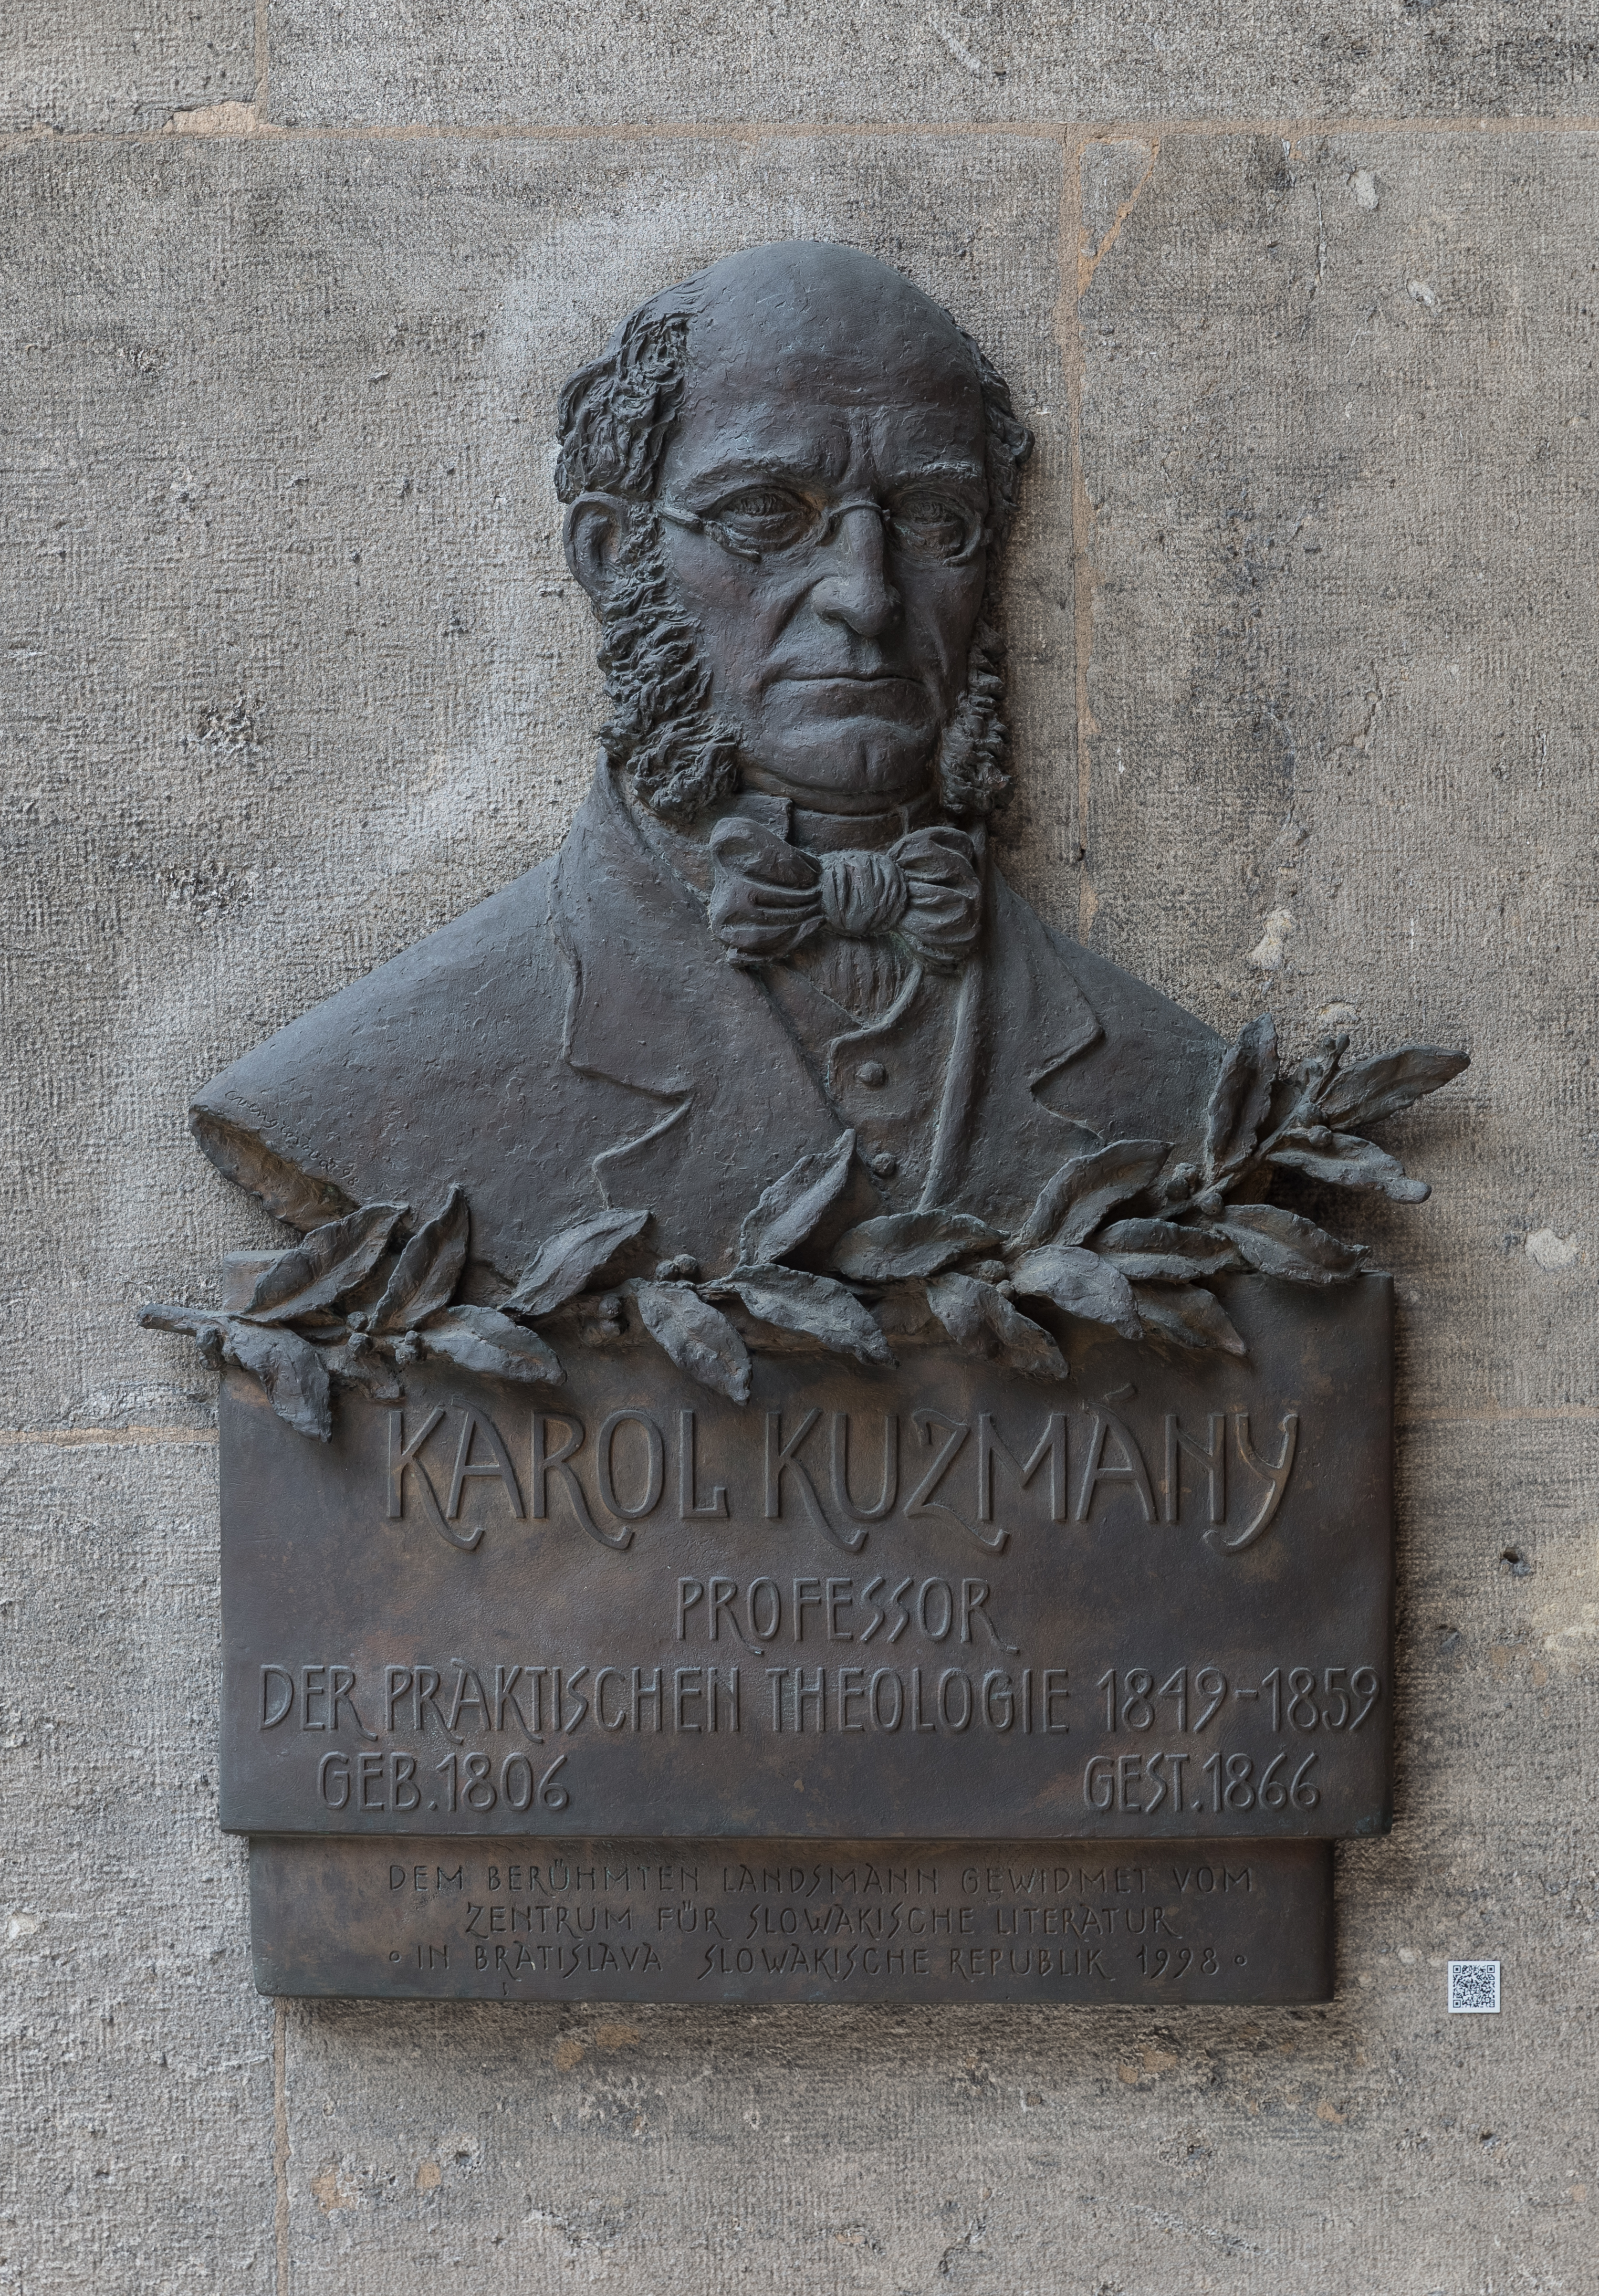 Karol Kuzmány (1806-1866), autor and theologian, Nr. 121, basrelief (bronze) in the Arkadenhof of the University of Vienna-3795-2